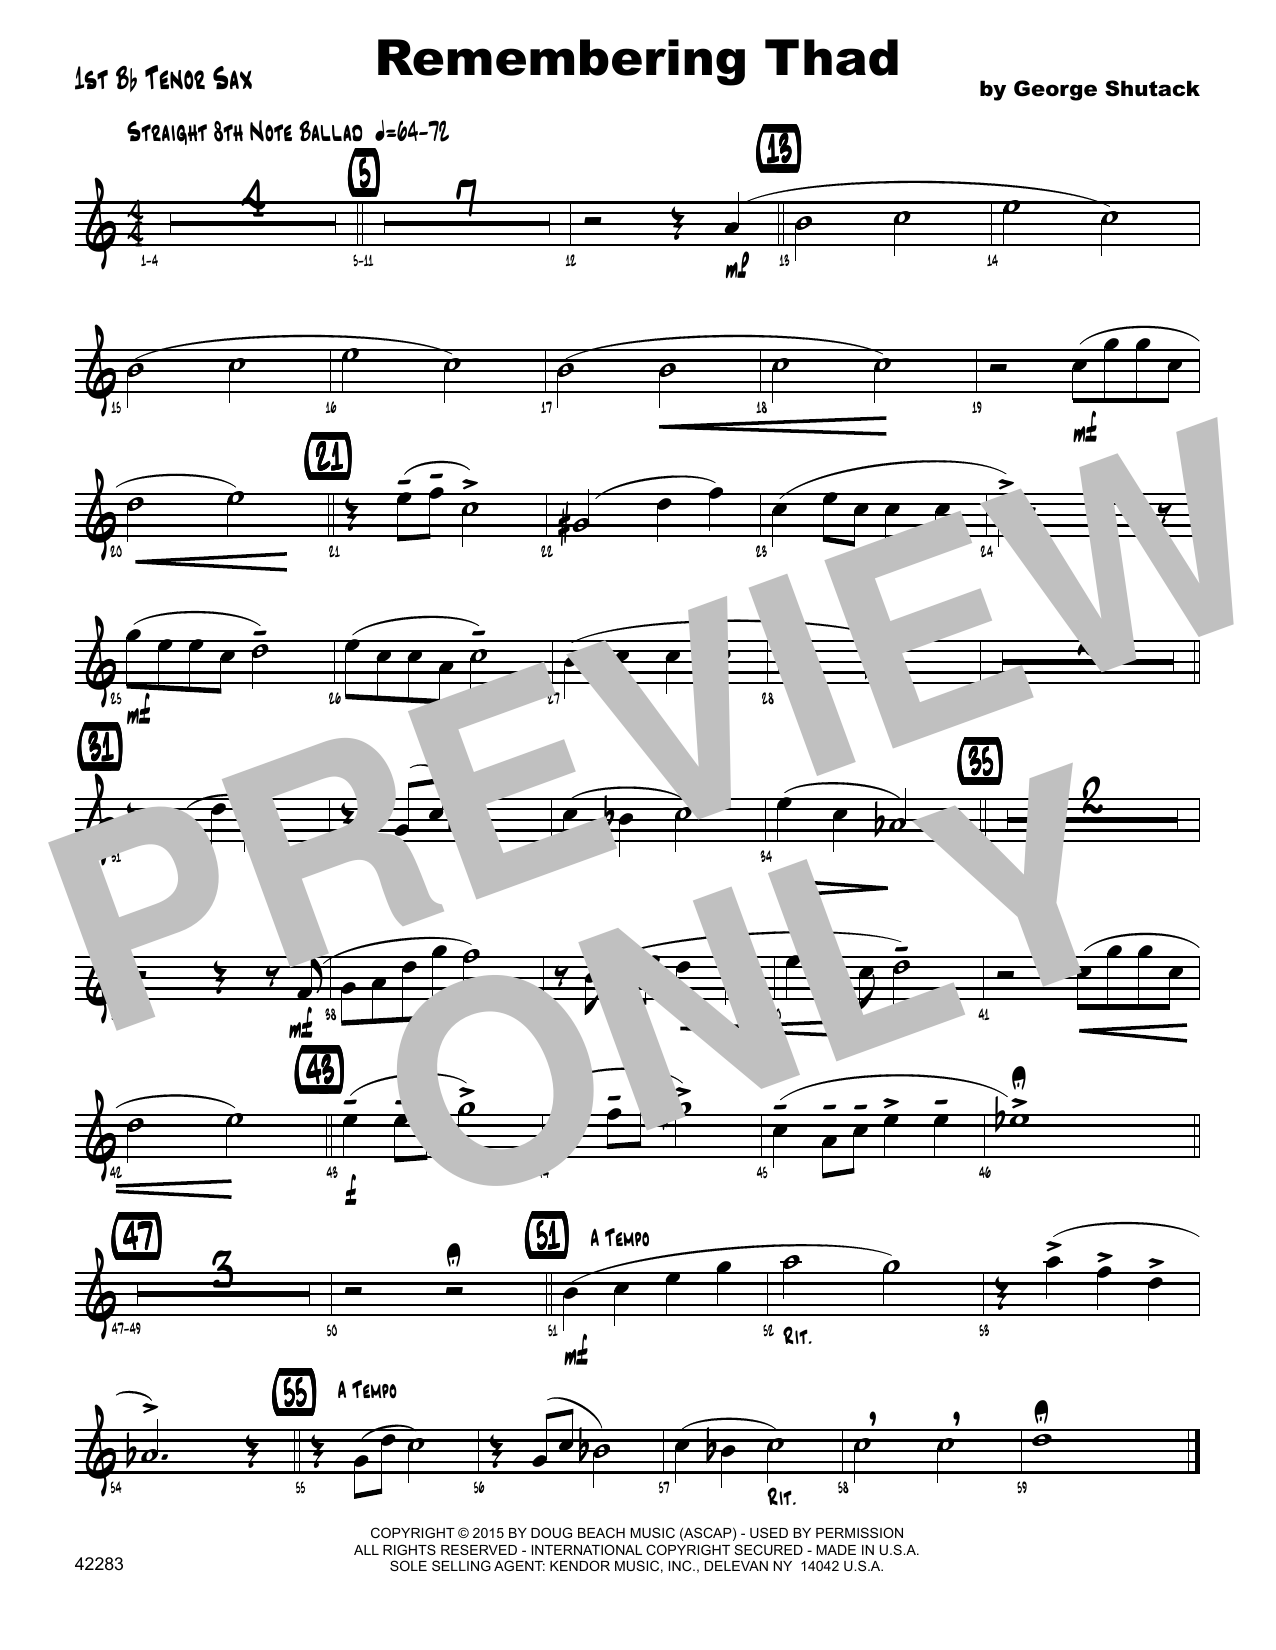 Download George Shutack Remembering Thad - 1st Tenor Saxophone Sheet Music